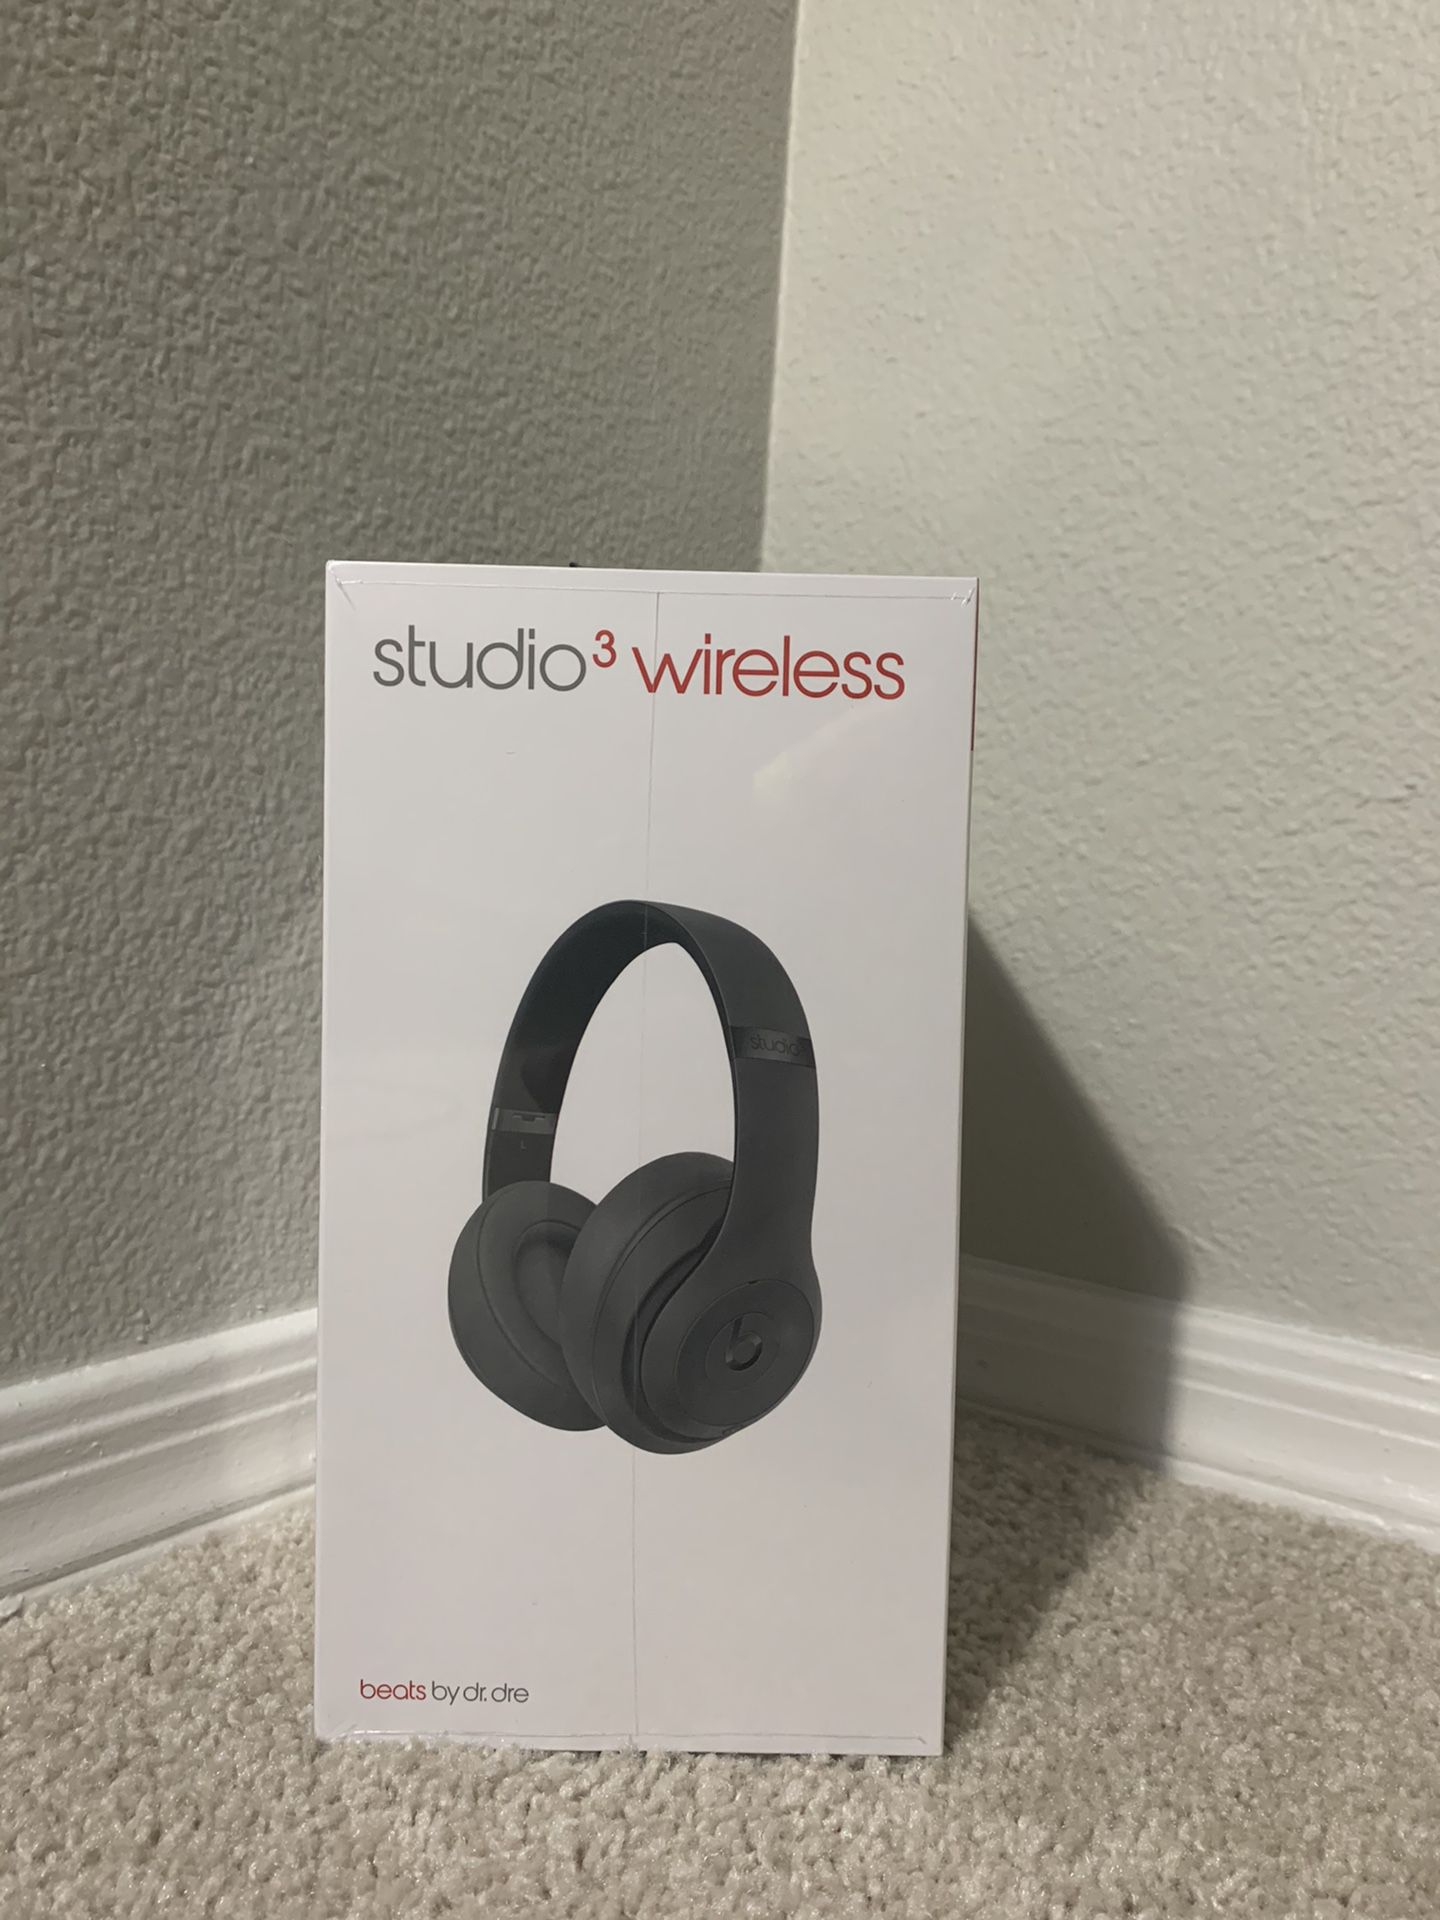 Beats studio 3 wireless (unopened)